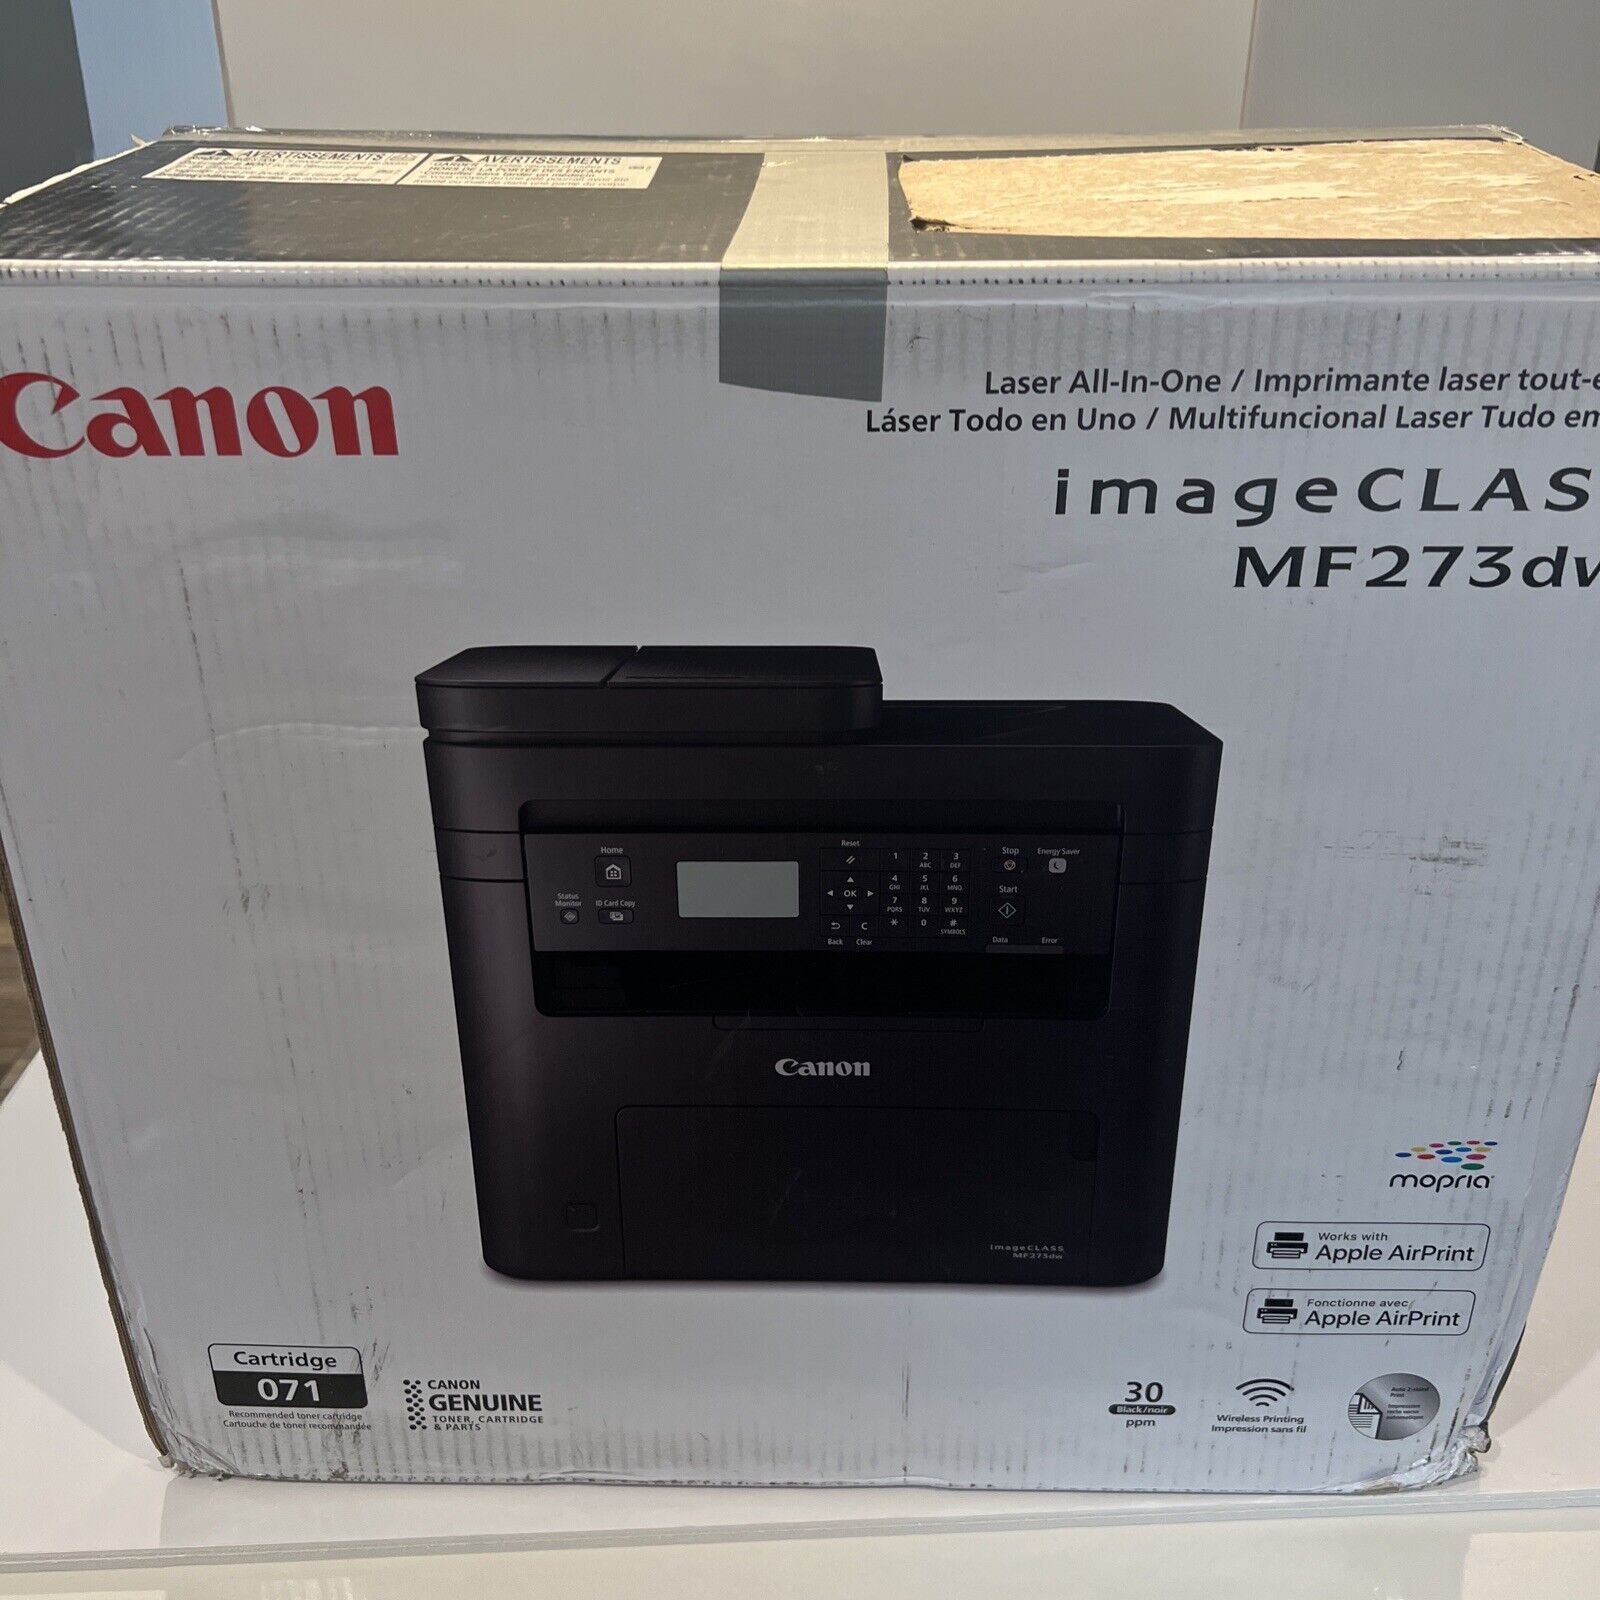 Canon imageCLASS MF273dw Wireless All-in-One Laser Printer